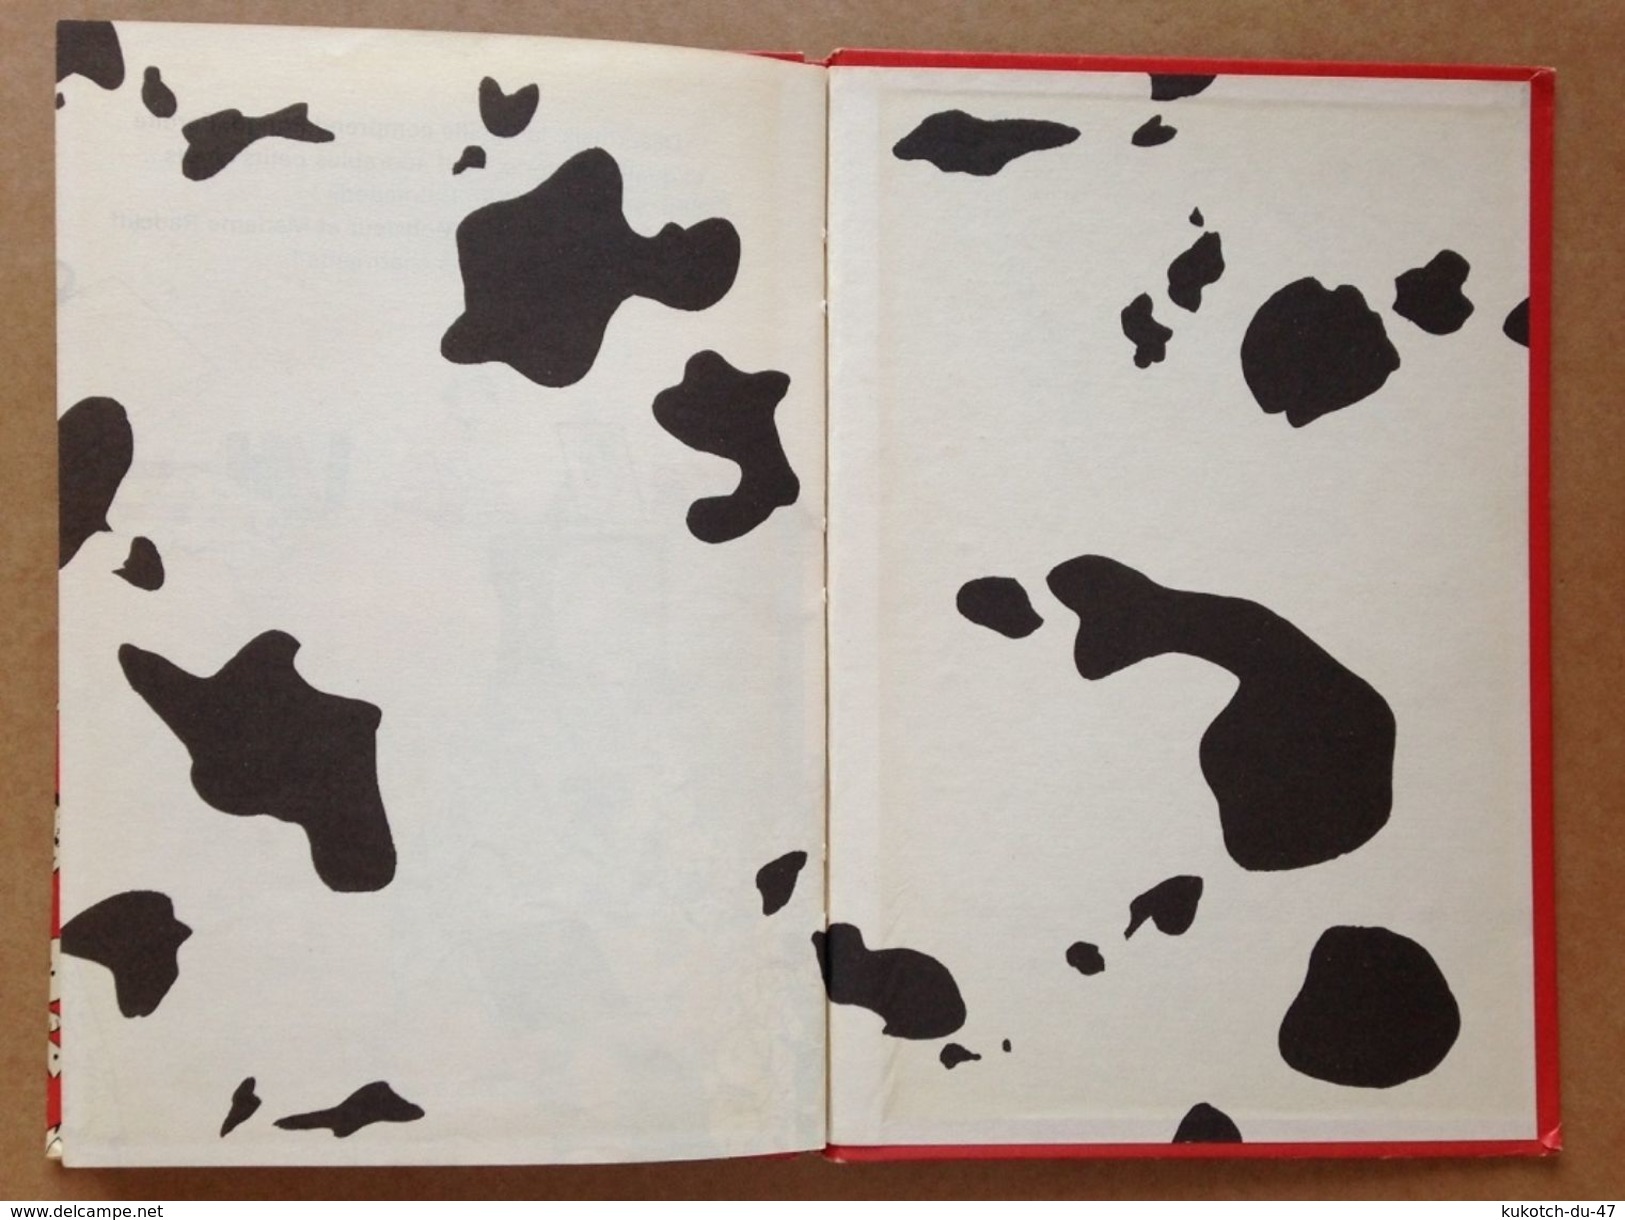 Disney - Mickey Club du livre - Les 101 dalmatiens (1982)